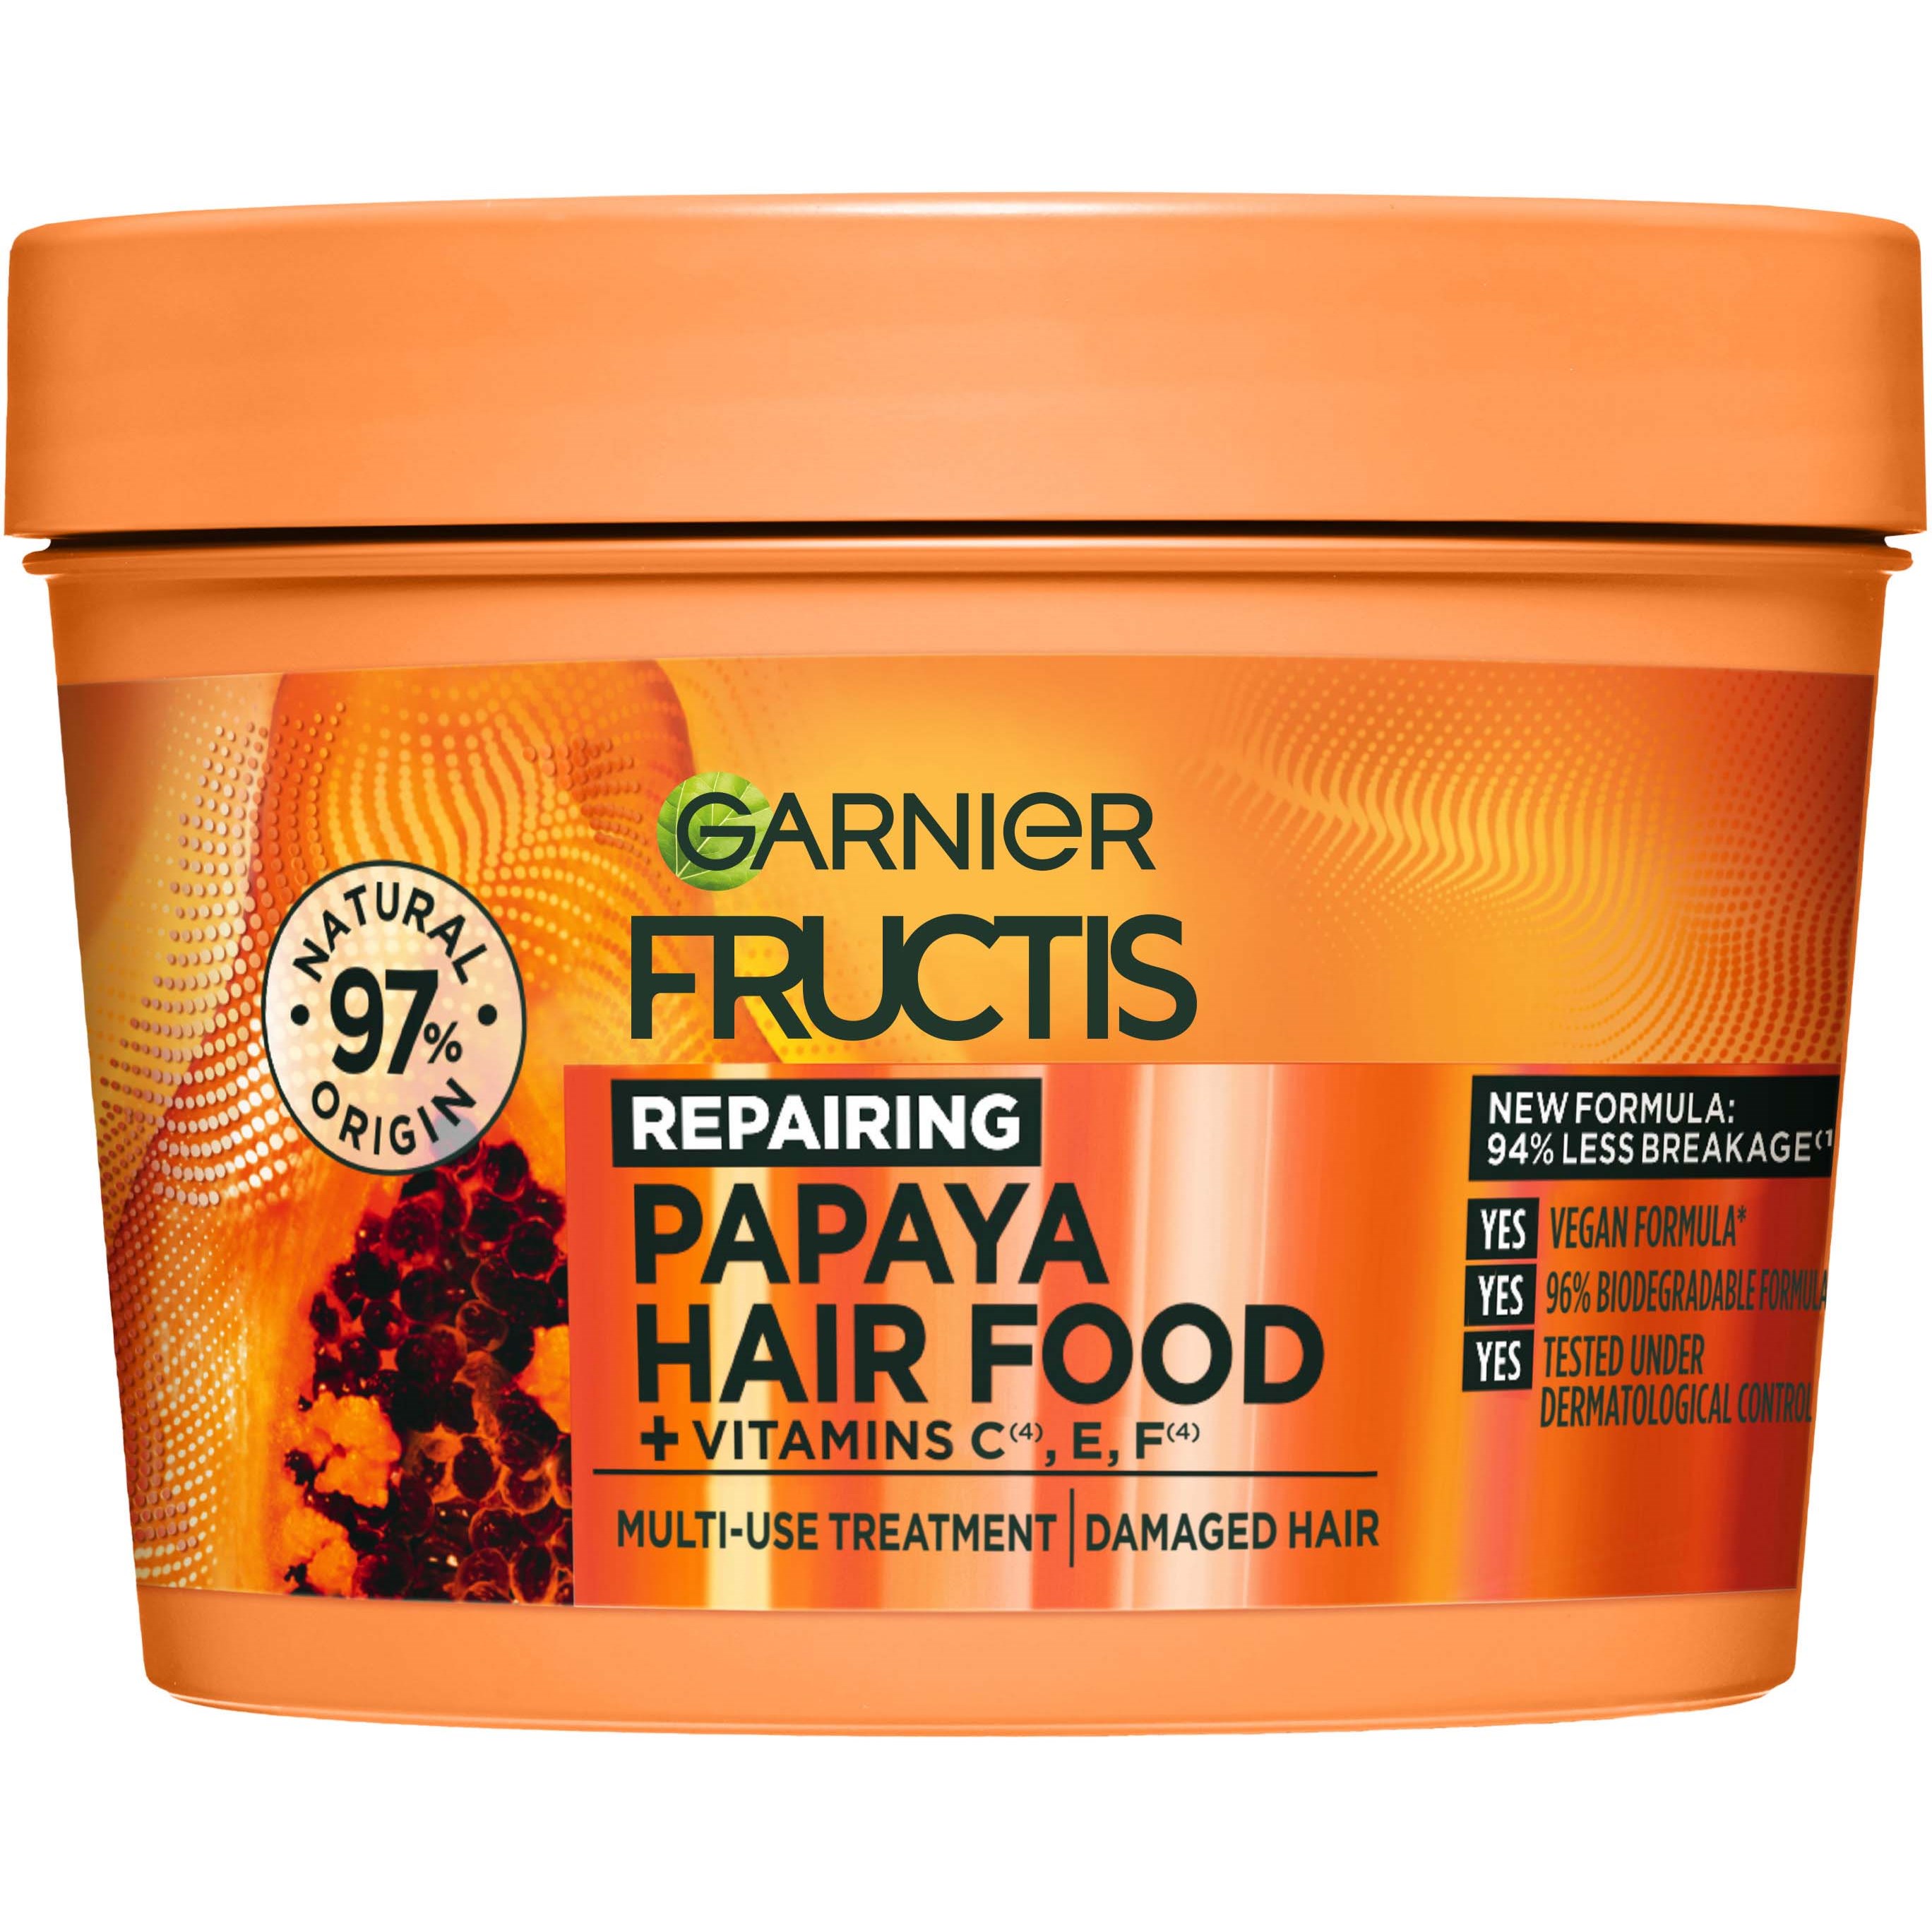 Bilde av Garnier Fructis Papaya Hair Food Repairing Multi-use Treatment 400 Ml